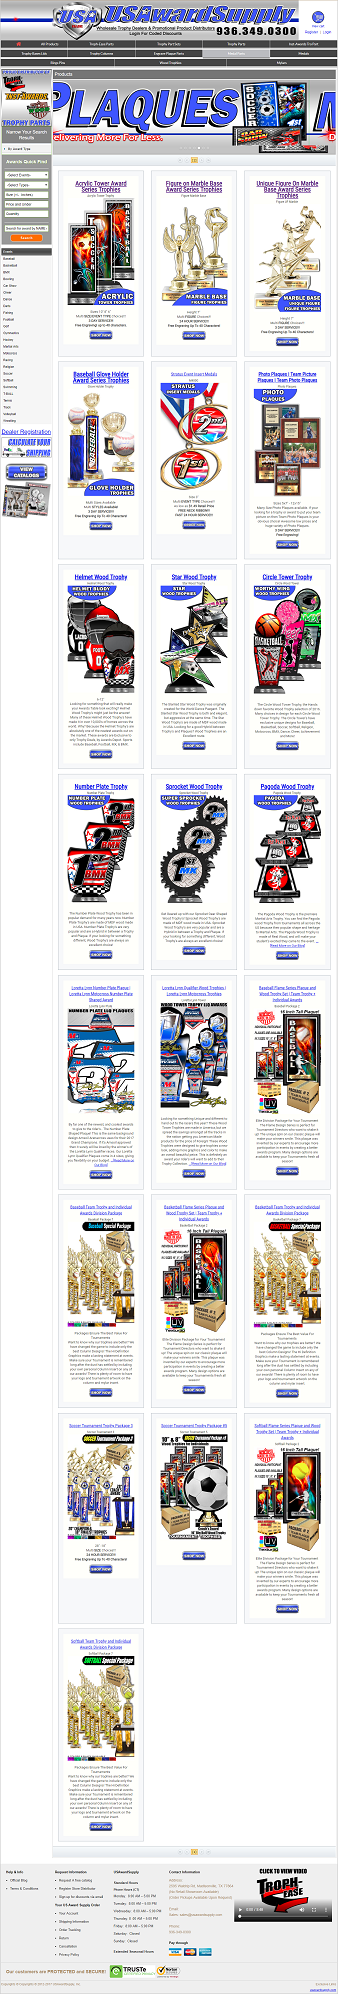 Wholesale trophy supplies eCommerce Web Design and Development 